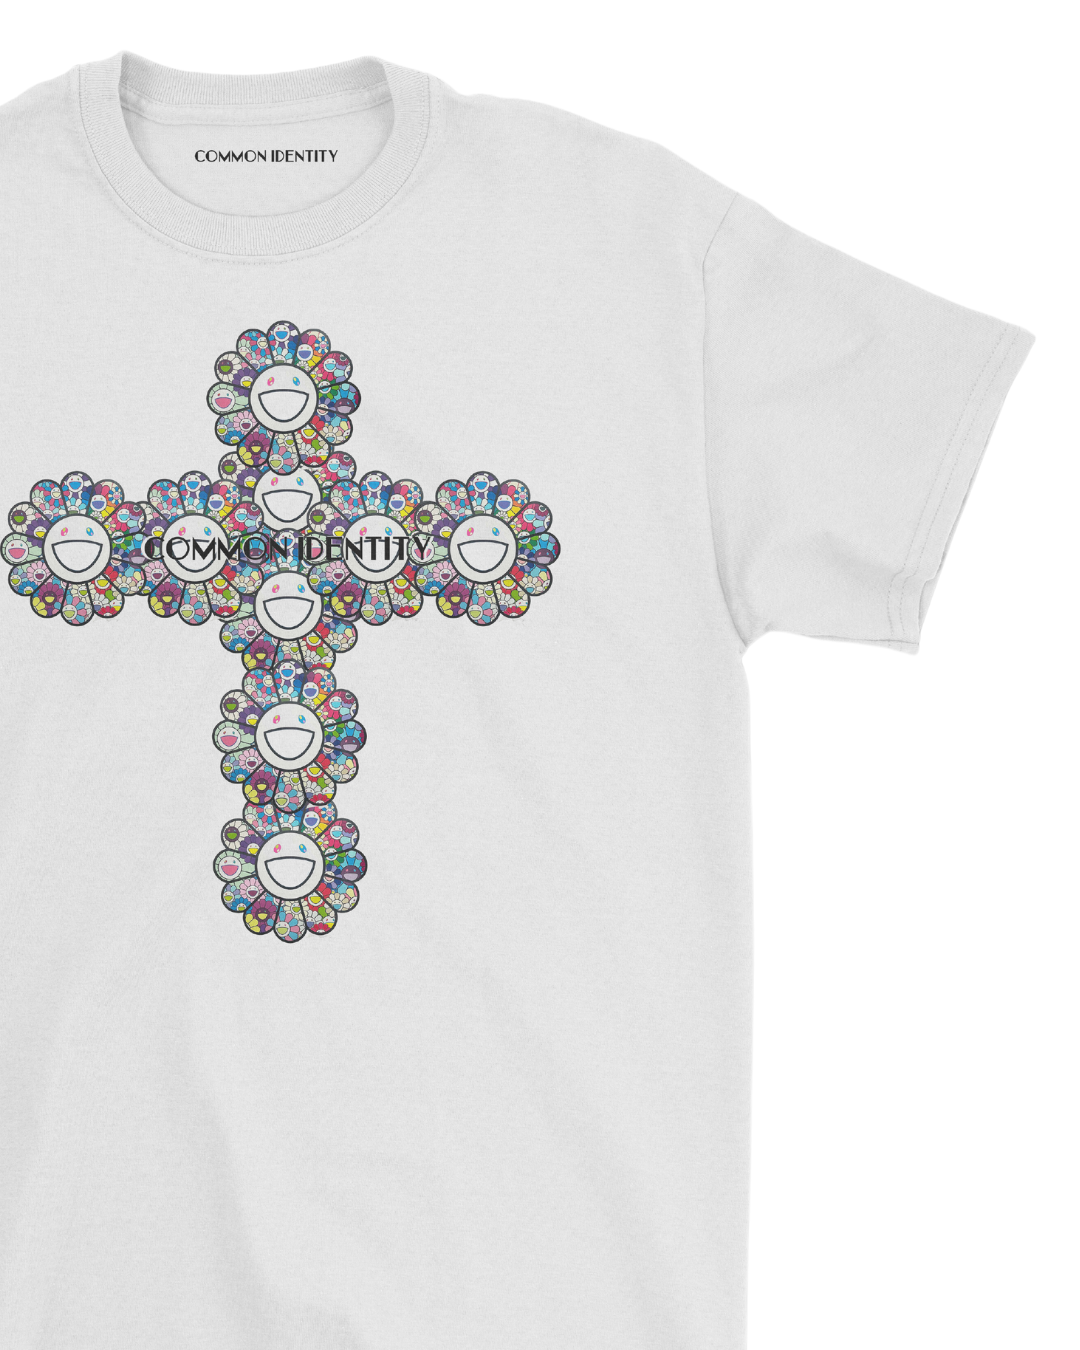 Murakami Religion - T-Shirt - Common Identity